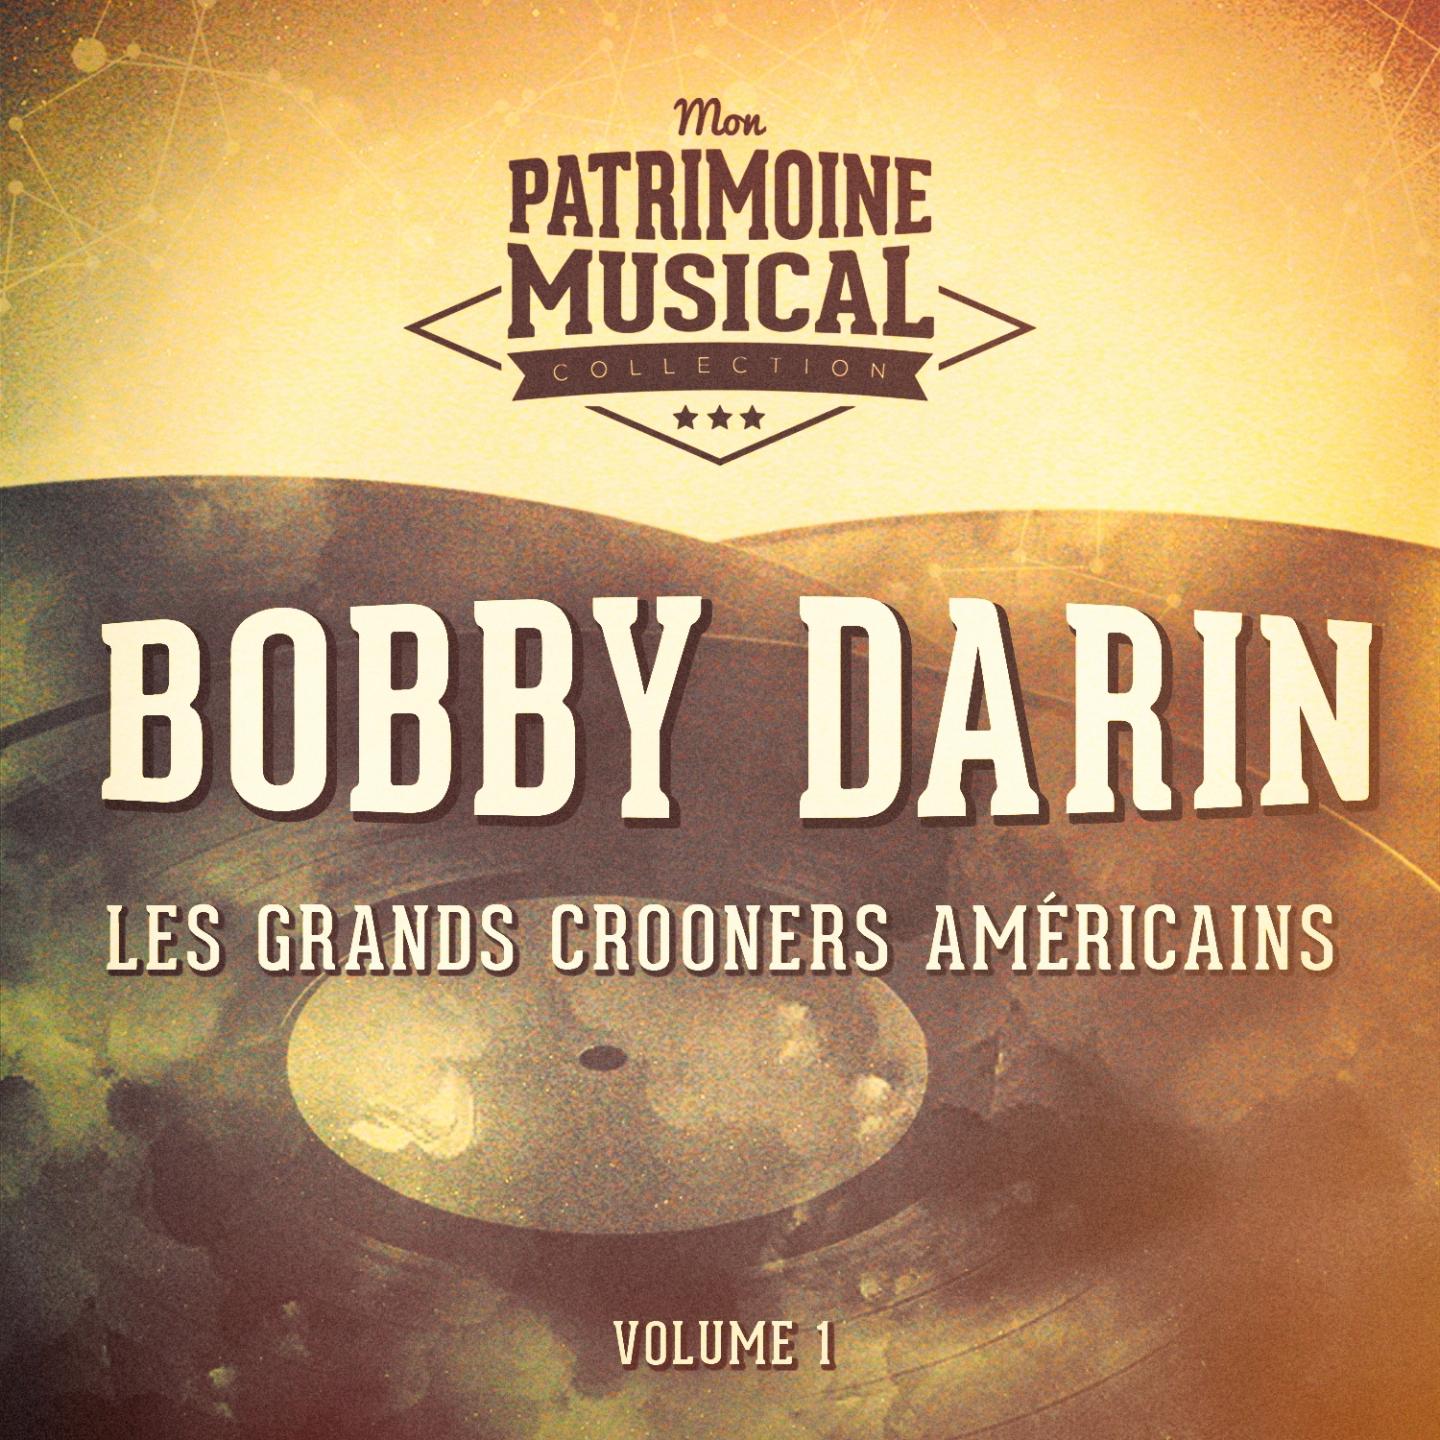 Les Grands Crooners Ame ricains: Bobby Darin, Vol. 1